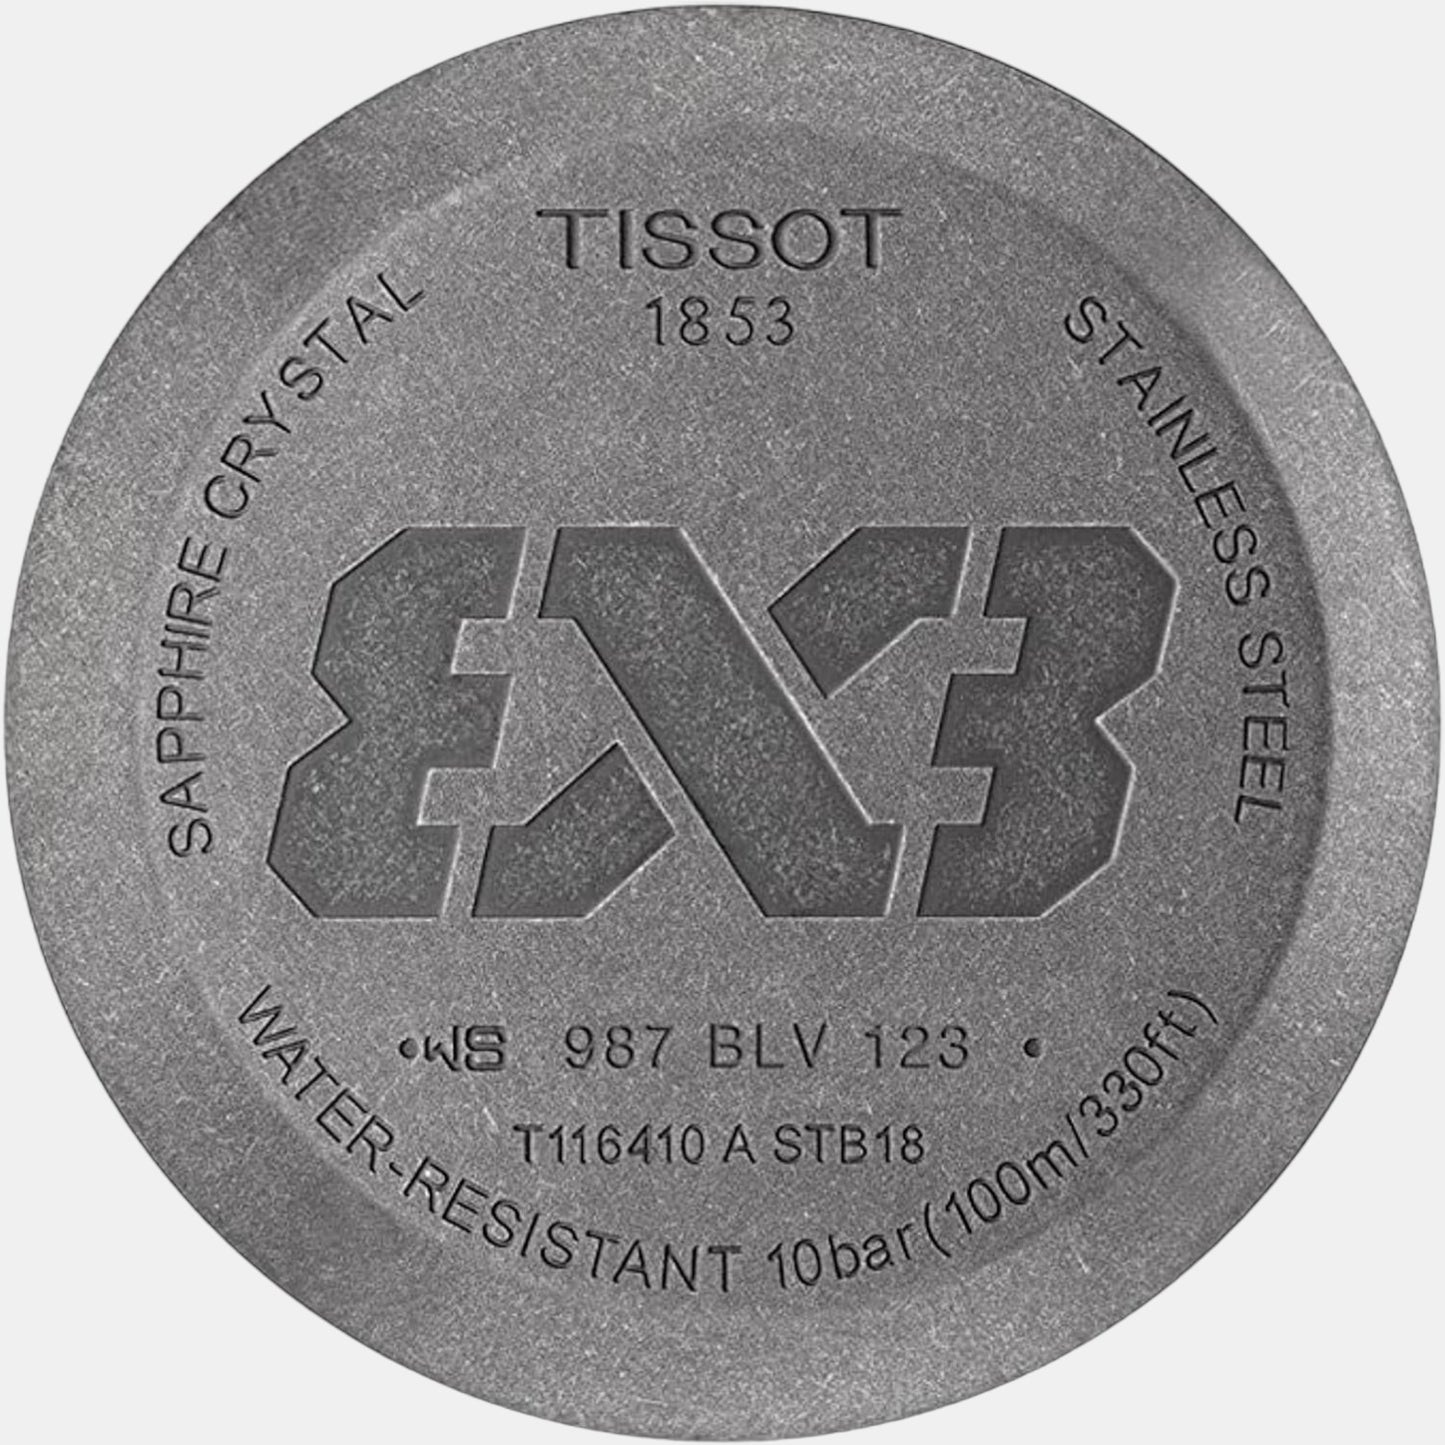 tissot-stainless-steel-black-analog-men-watch-t1164103606700